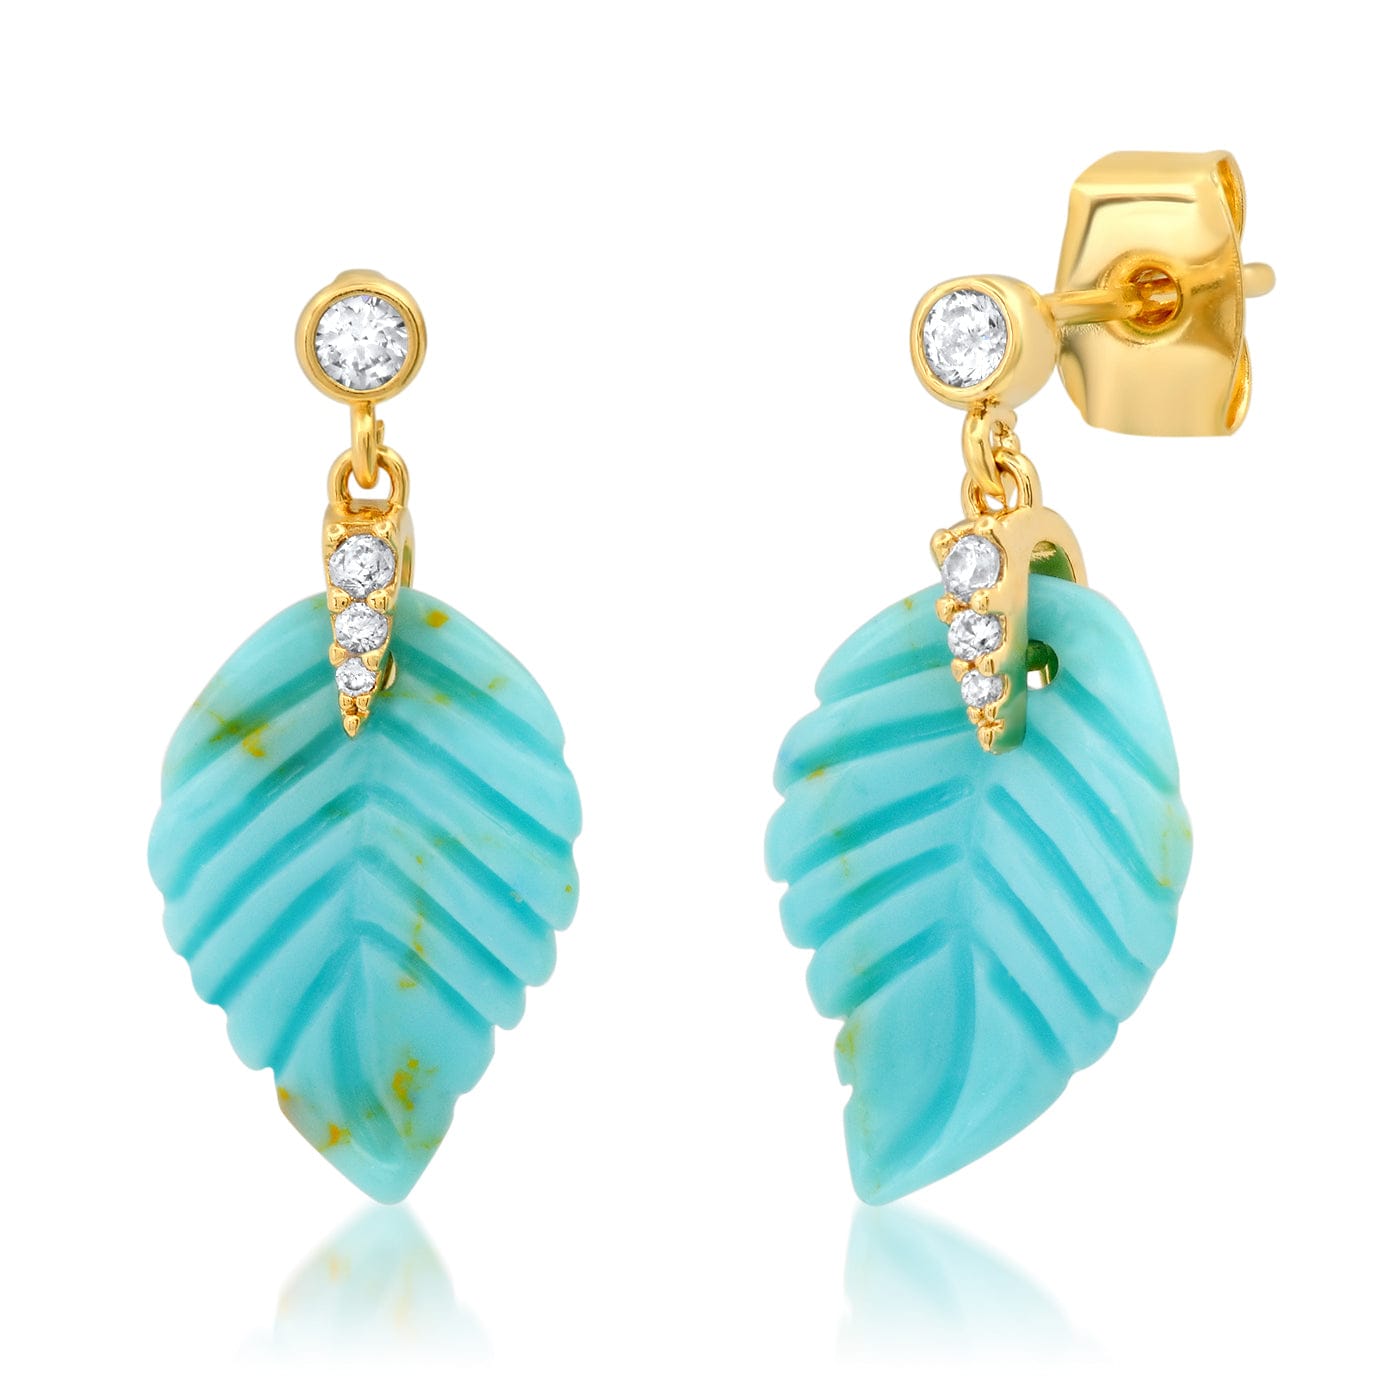 TAI JEWELRY Earrings Turquoise Feather Drop Earrings